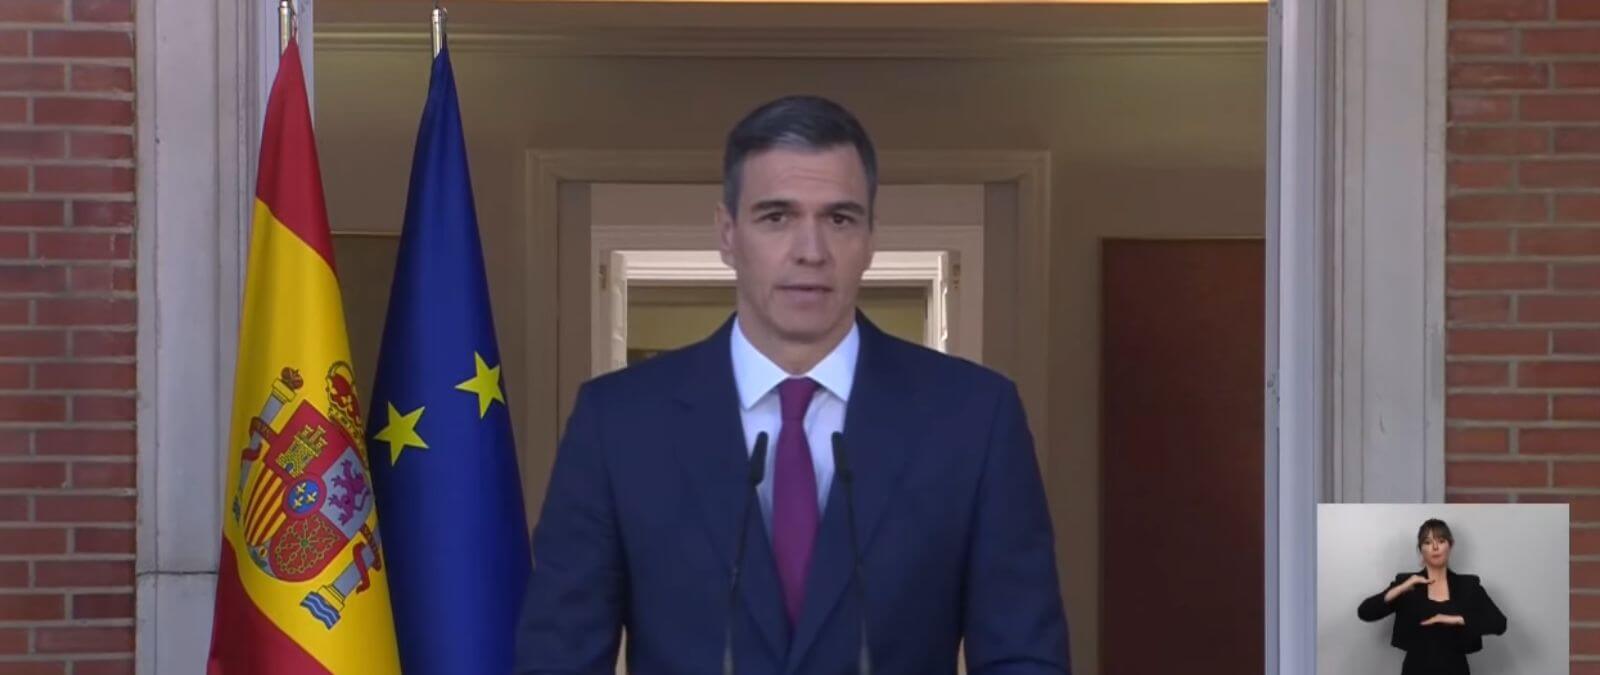 Pedro Sánchez continúa como presidente del Gobierno de España